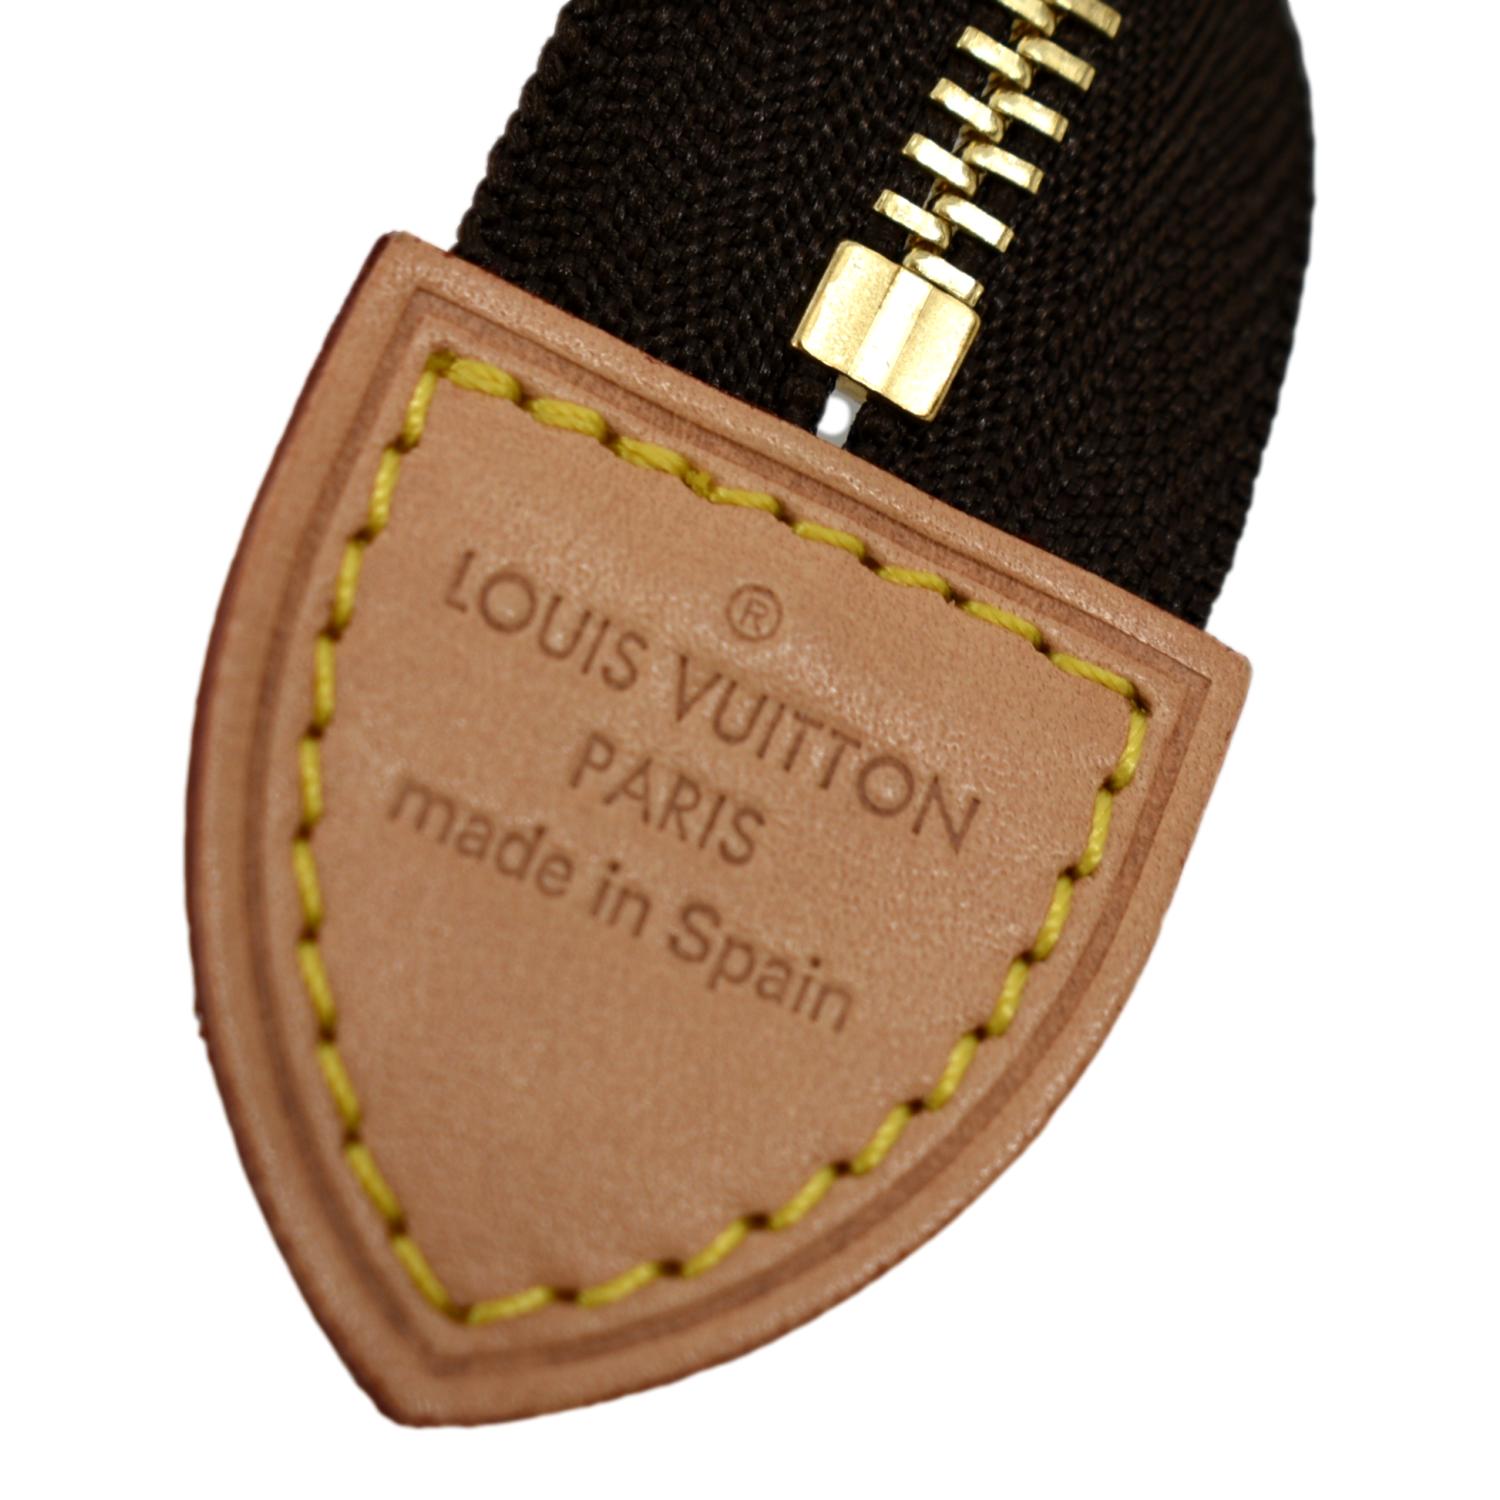 Louis Vuitton Monogram Toiletry 15 Cosmetic Pouch to Crossbody Handbag Purse